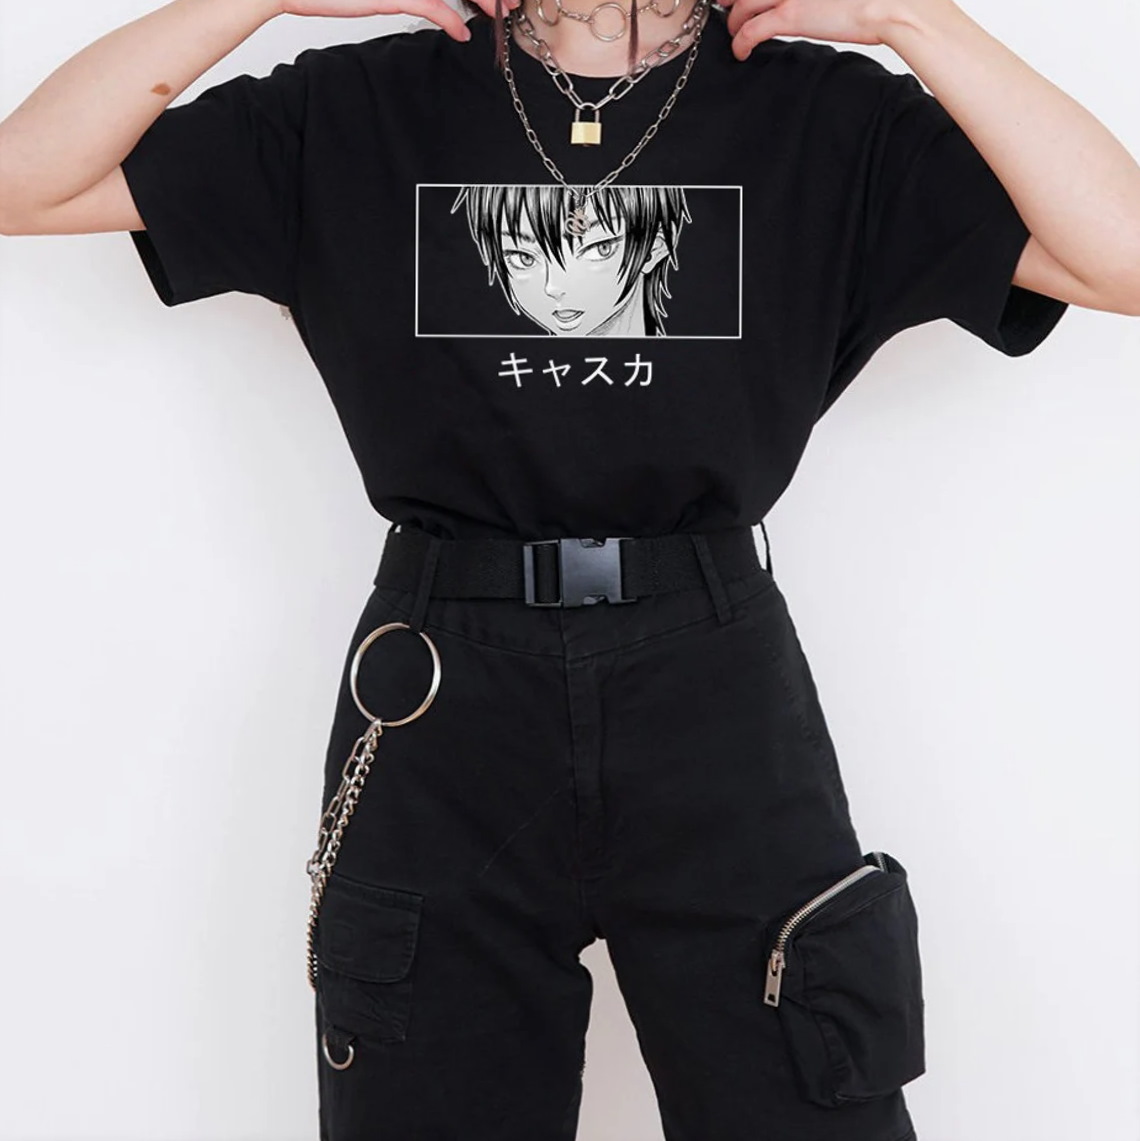 Casca Eyes Shirt Berserk Anime Unisex T-shirt